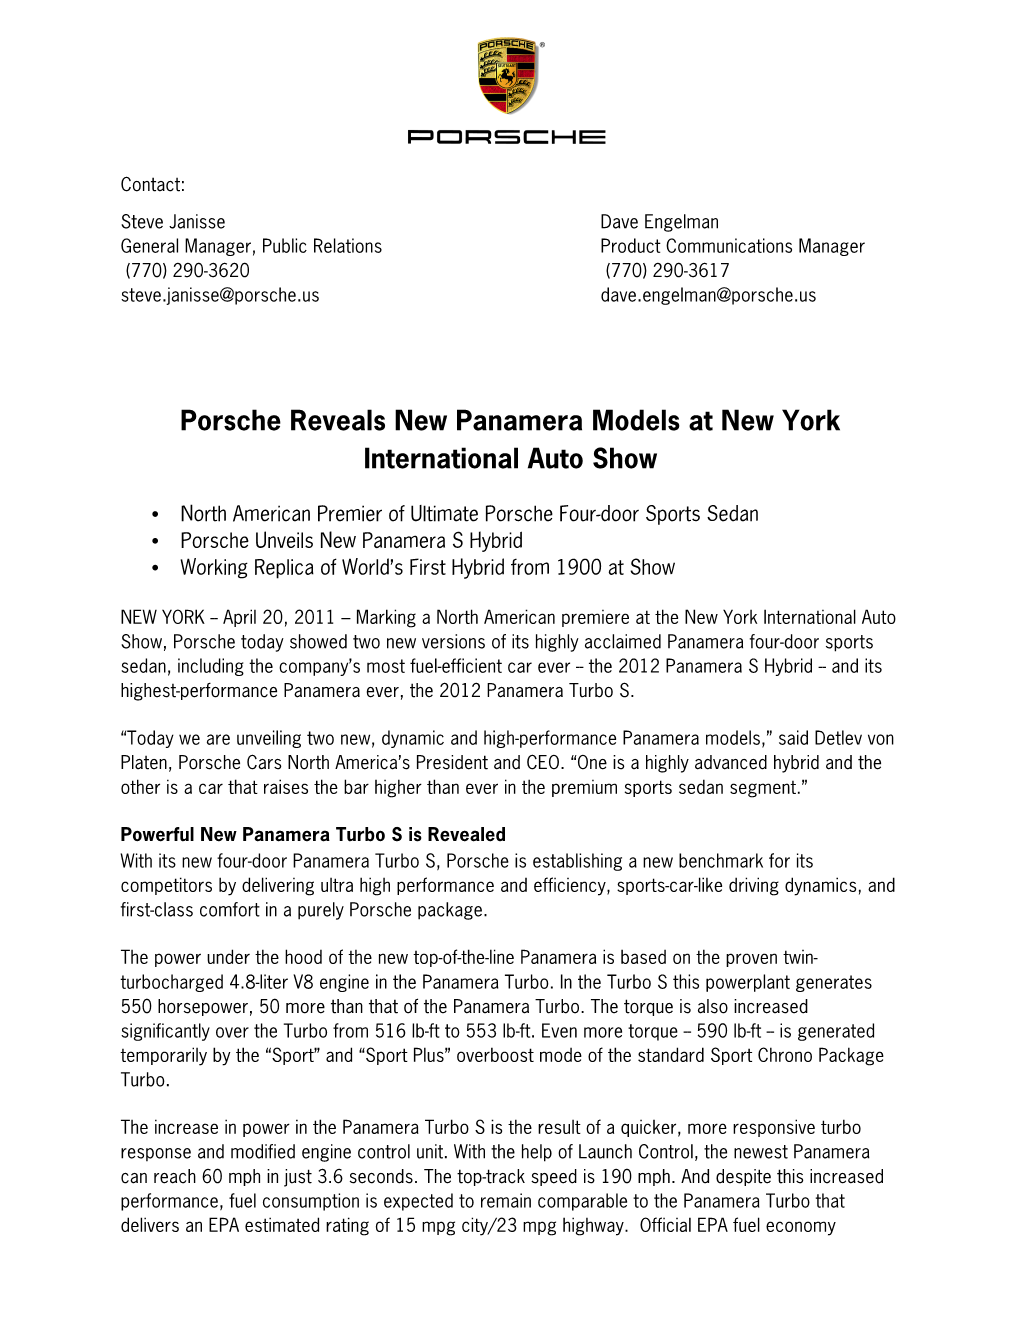 Porsche Reveals New Panamera Models at New York International Auto Show